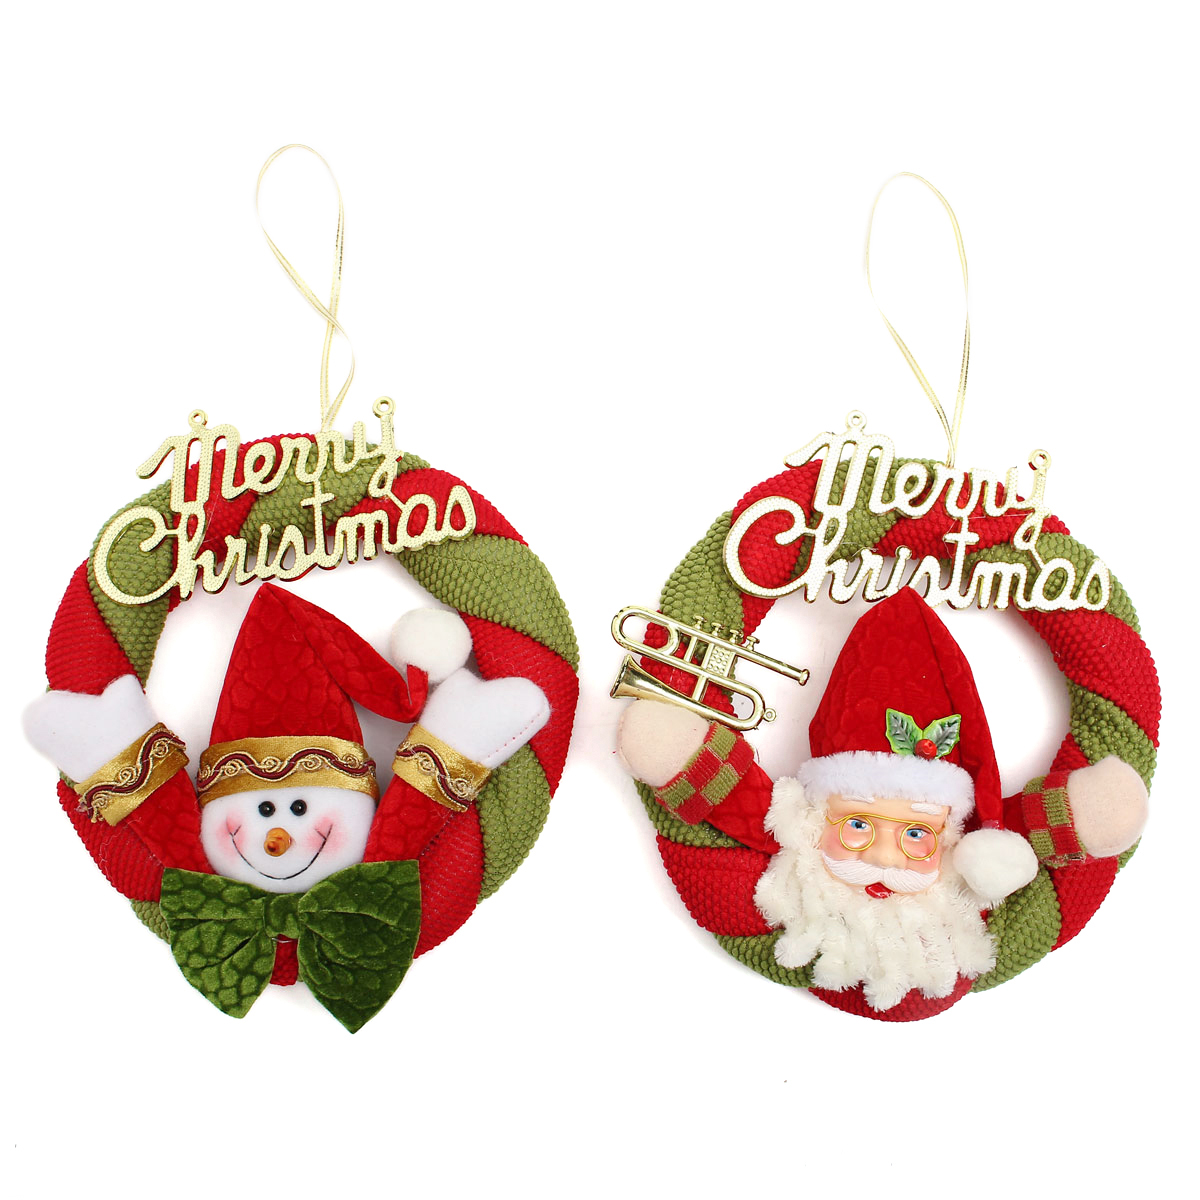 Christmas-Santa-Claus-Ornaments-Festival-Party-Xmas-Tree-Hanging-Decoration-1002250-2